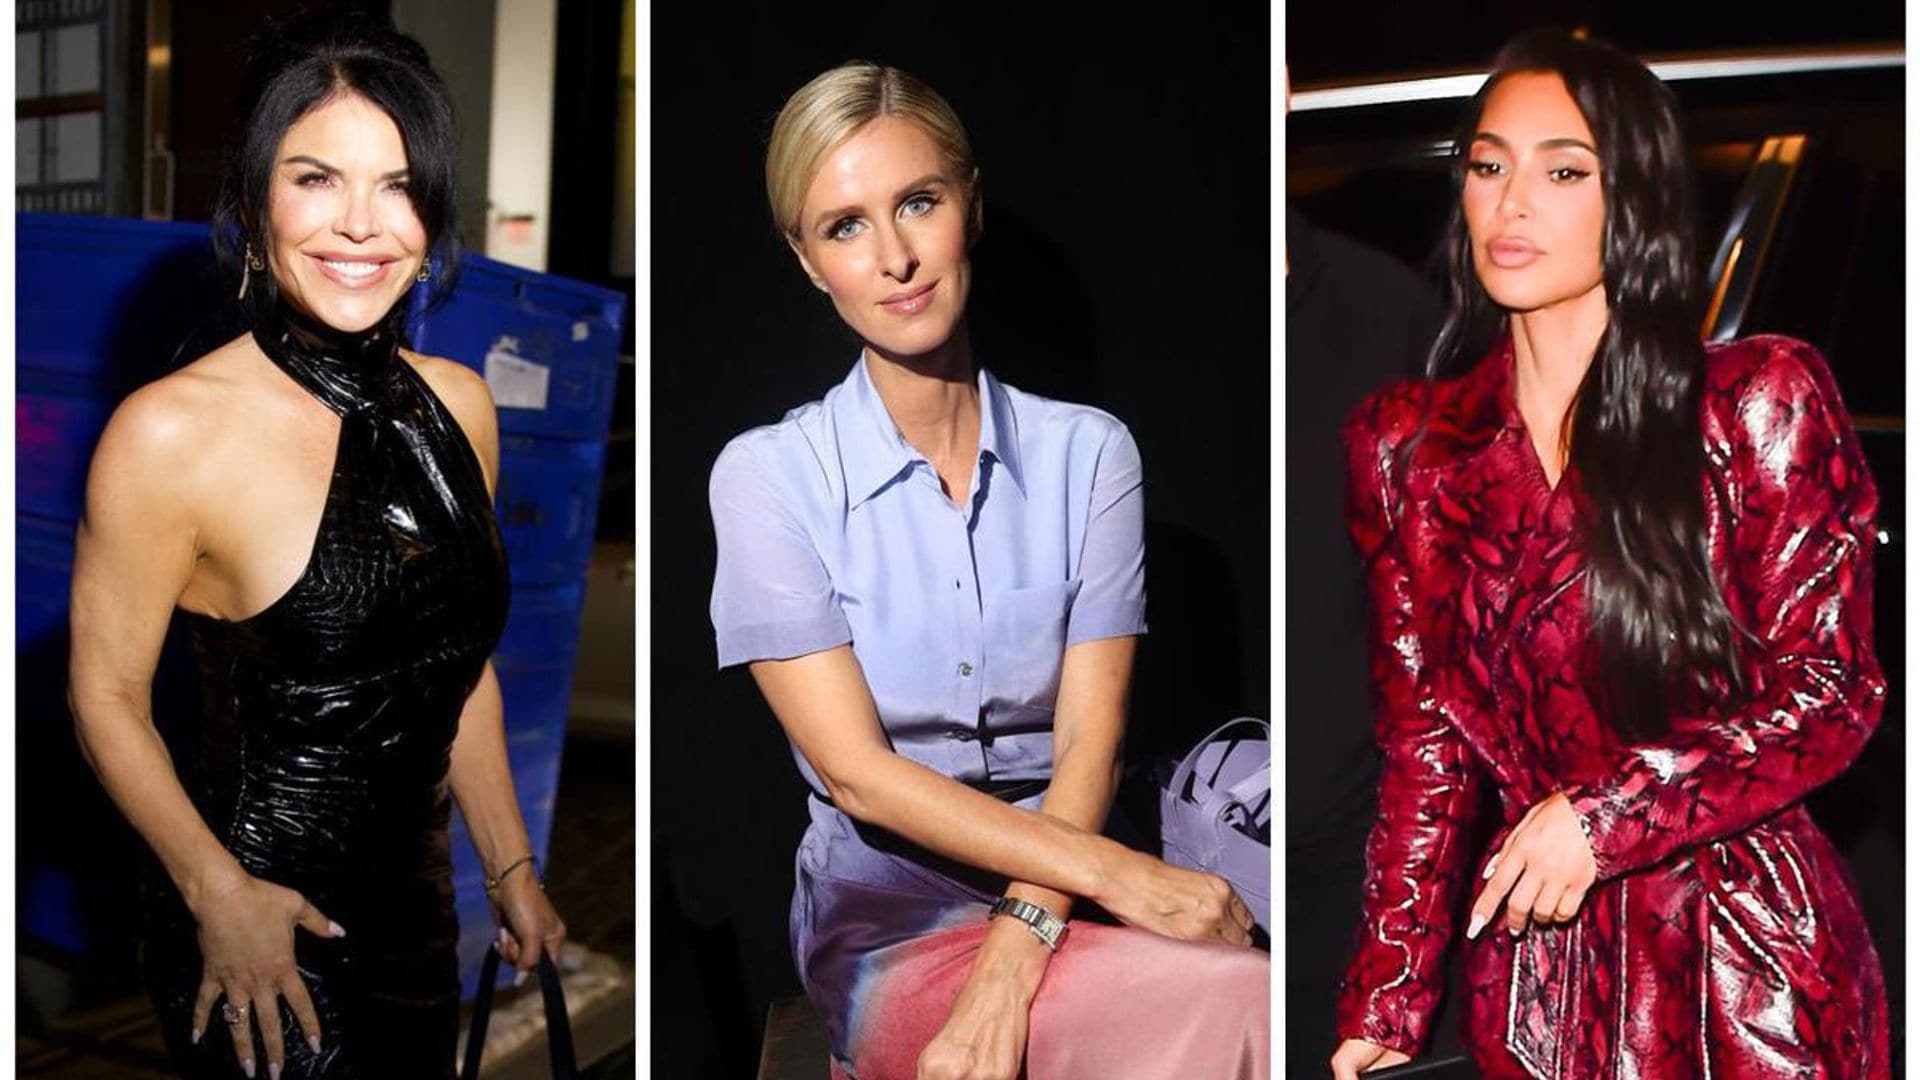 Lauren Sánchez, Nicky Hilton, and Kim Kardashian enjoy a stylish night out in SoHo